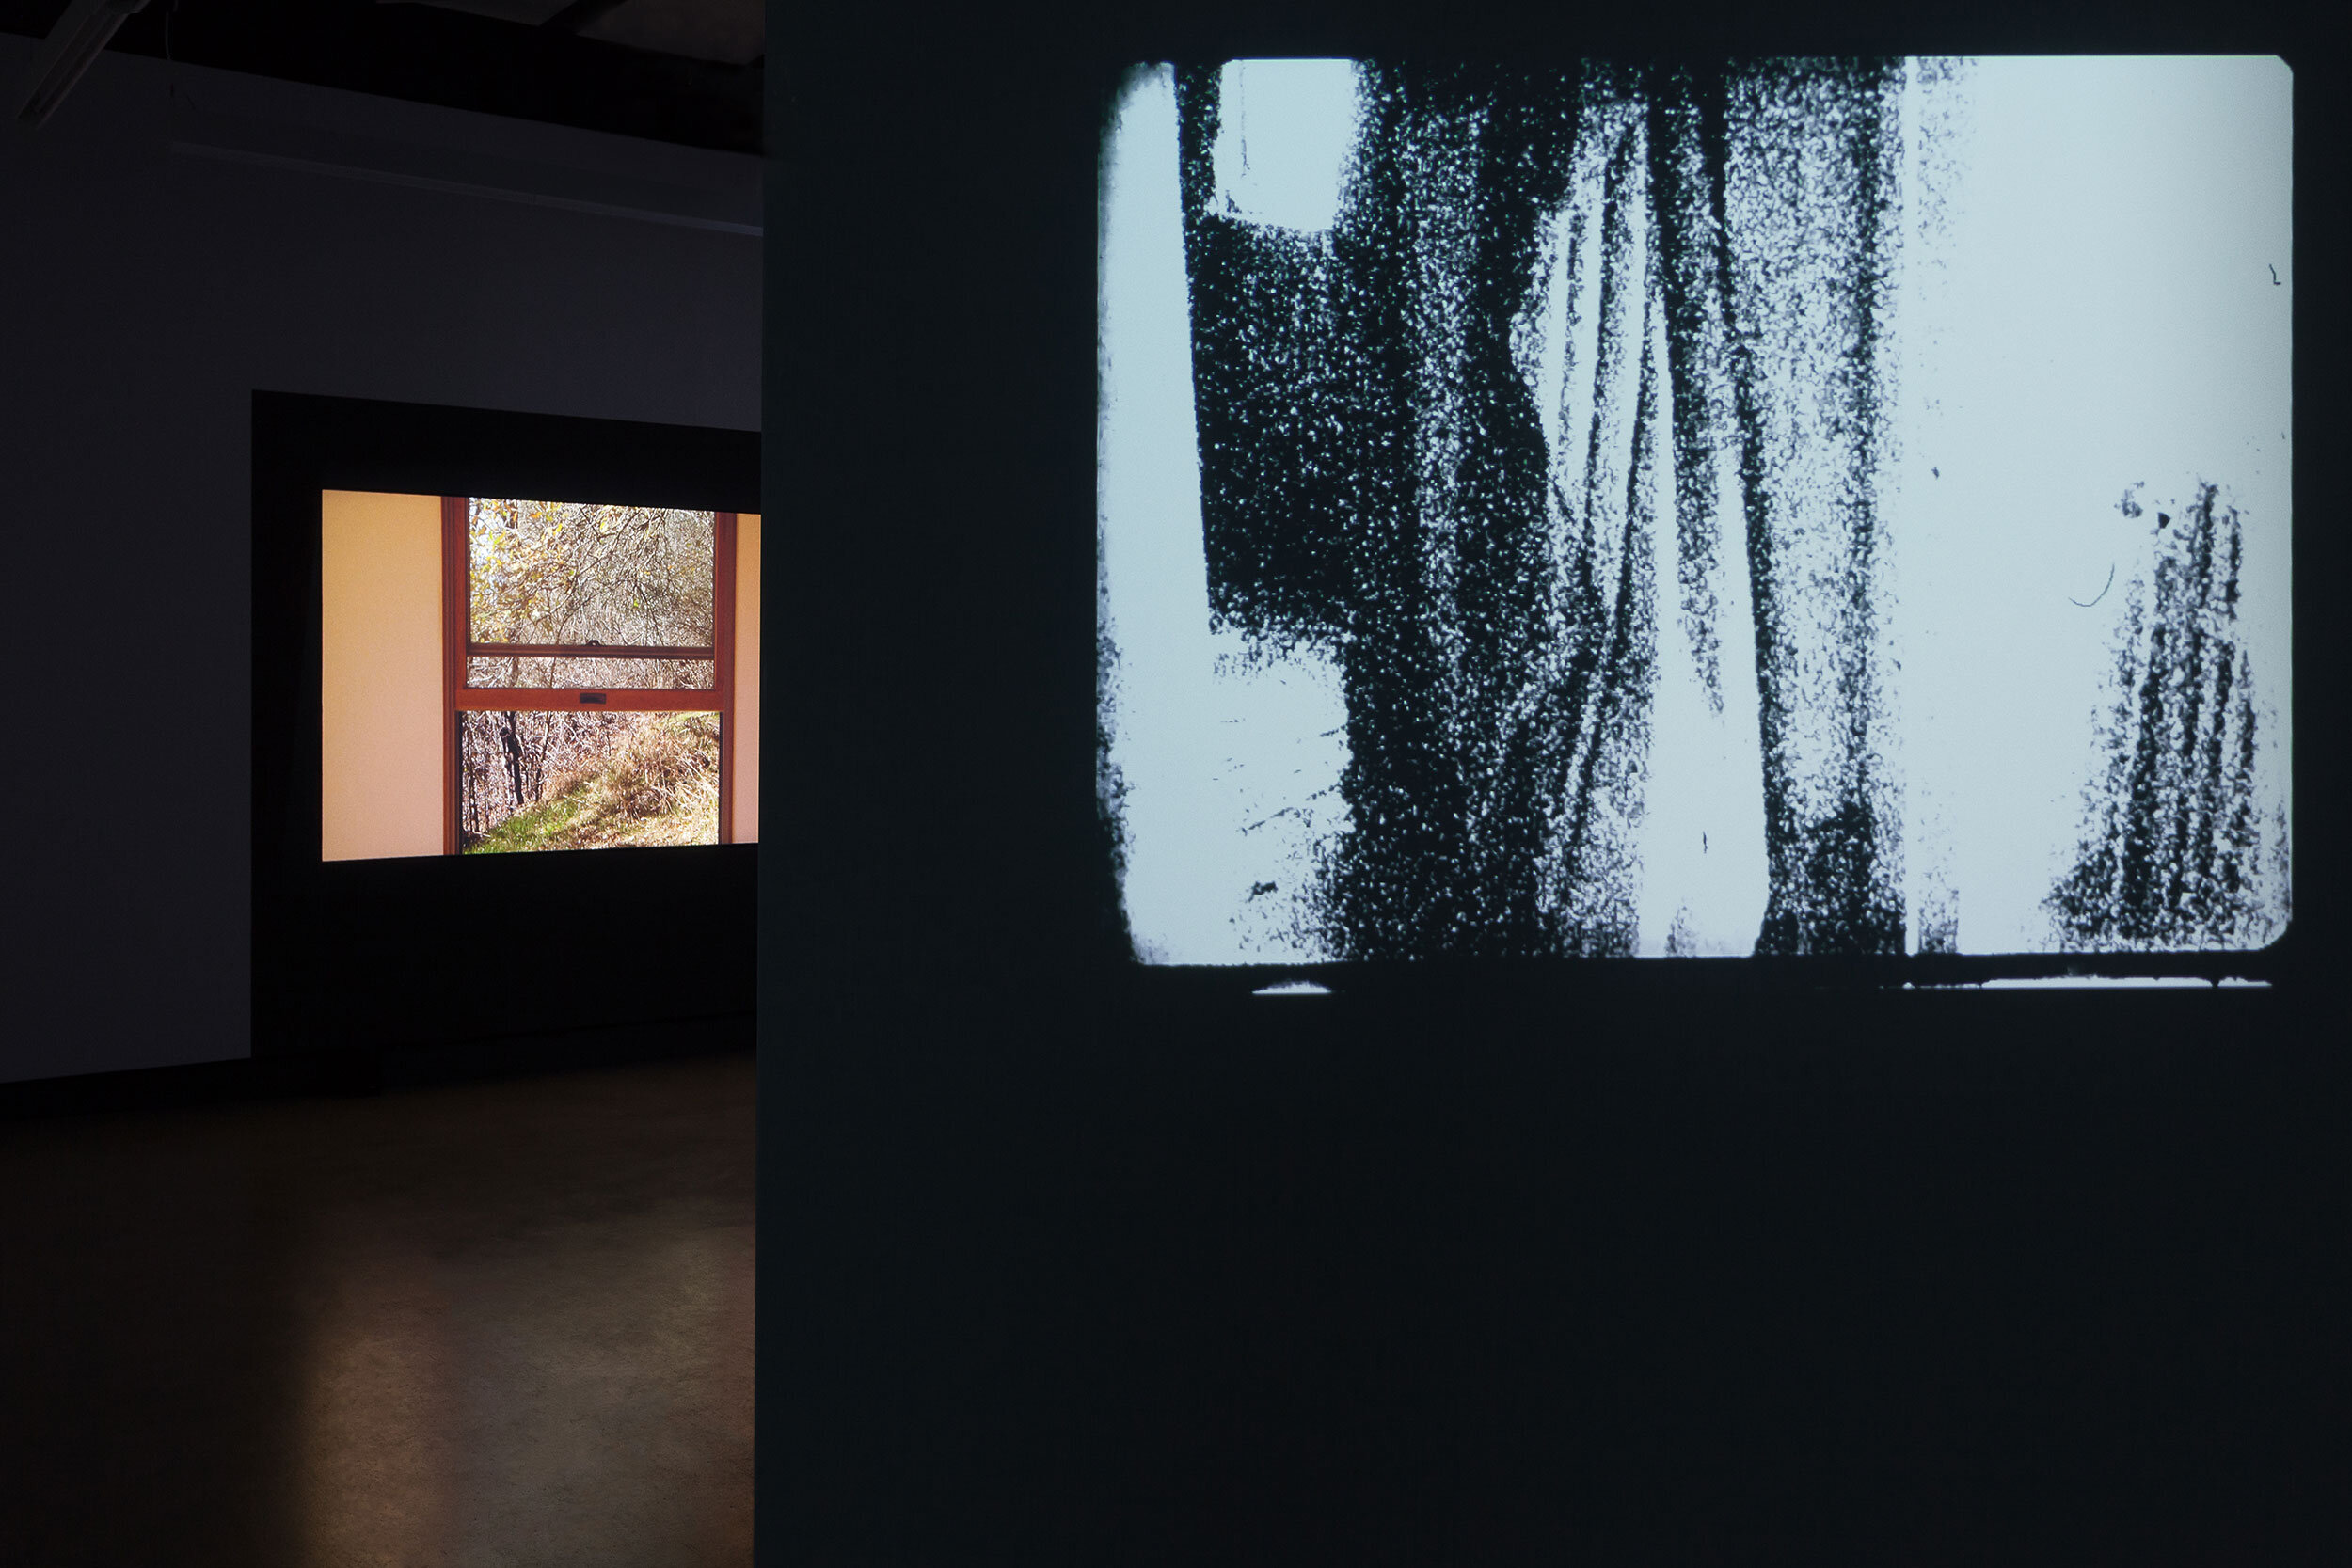  © Vue d’installation de l’exposition, Dazibao, 2018. De gauche à droite : James Benning, Miriam Sampaio. Photo : Marilou Crispin. 